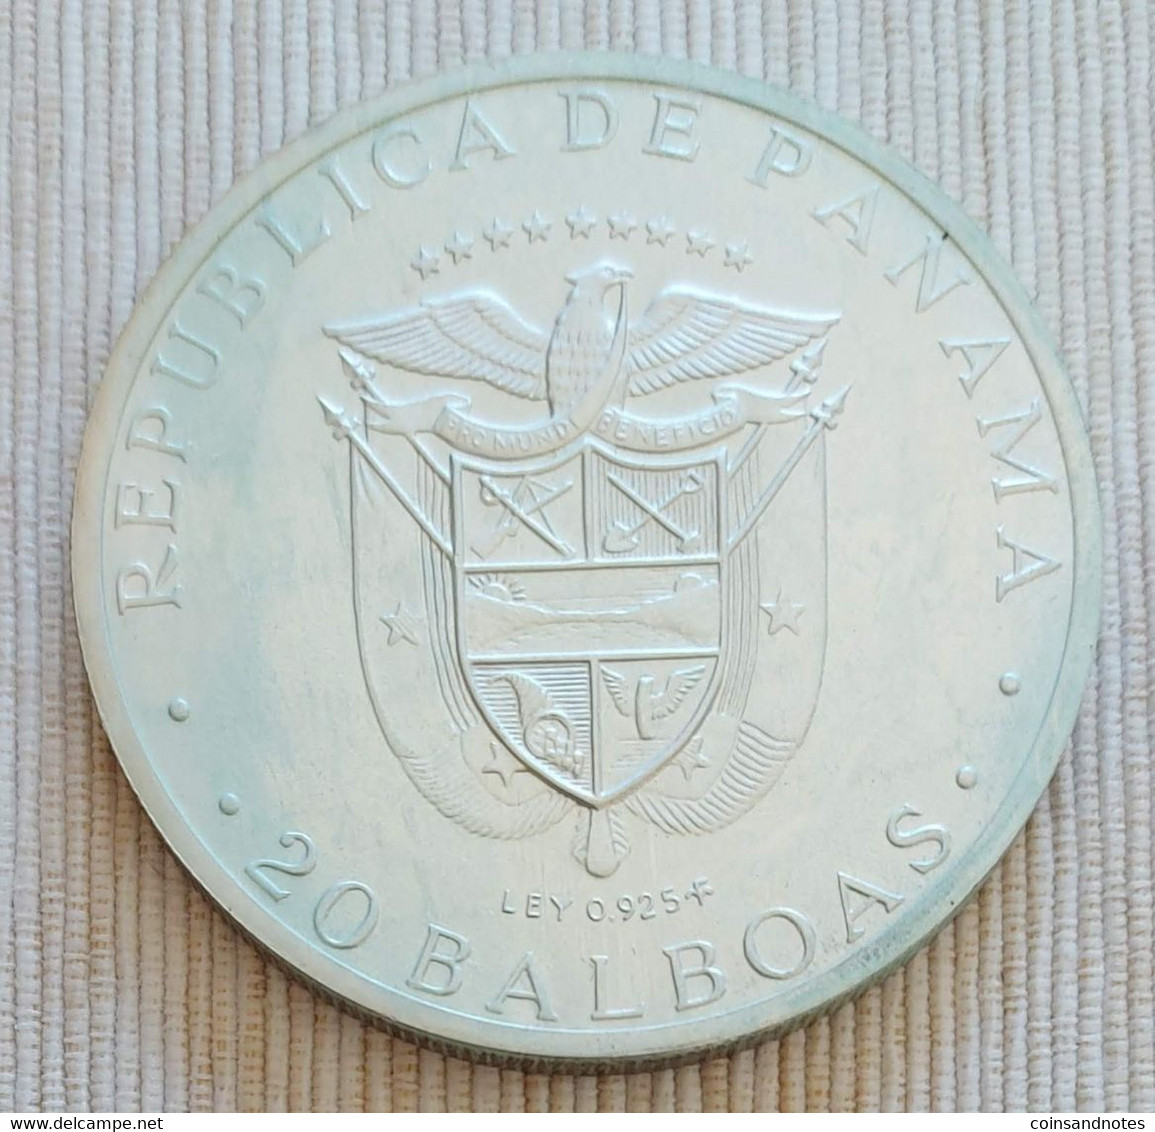 Panama 1973 - 20 Balboas - Simón Bolívar (1783-1830) - .925 Silver - KM# 31 - Otros – América